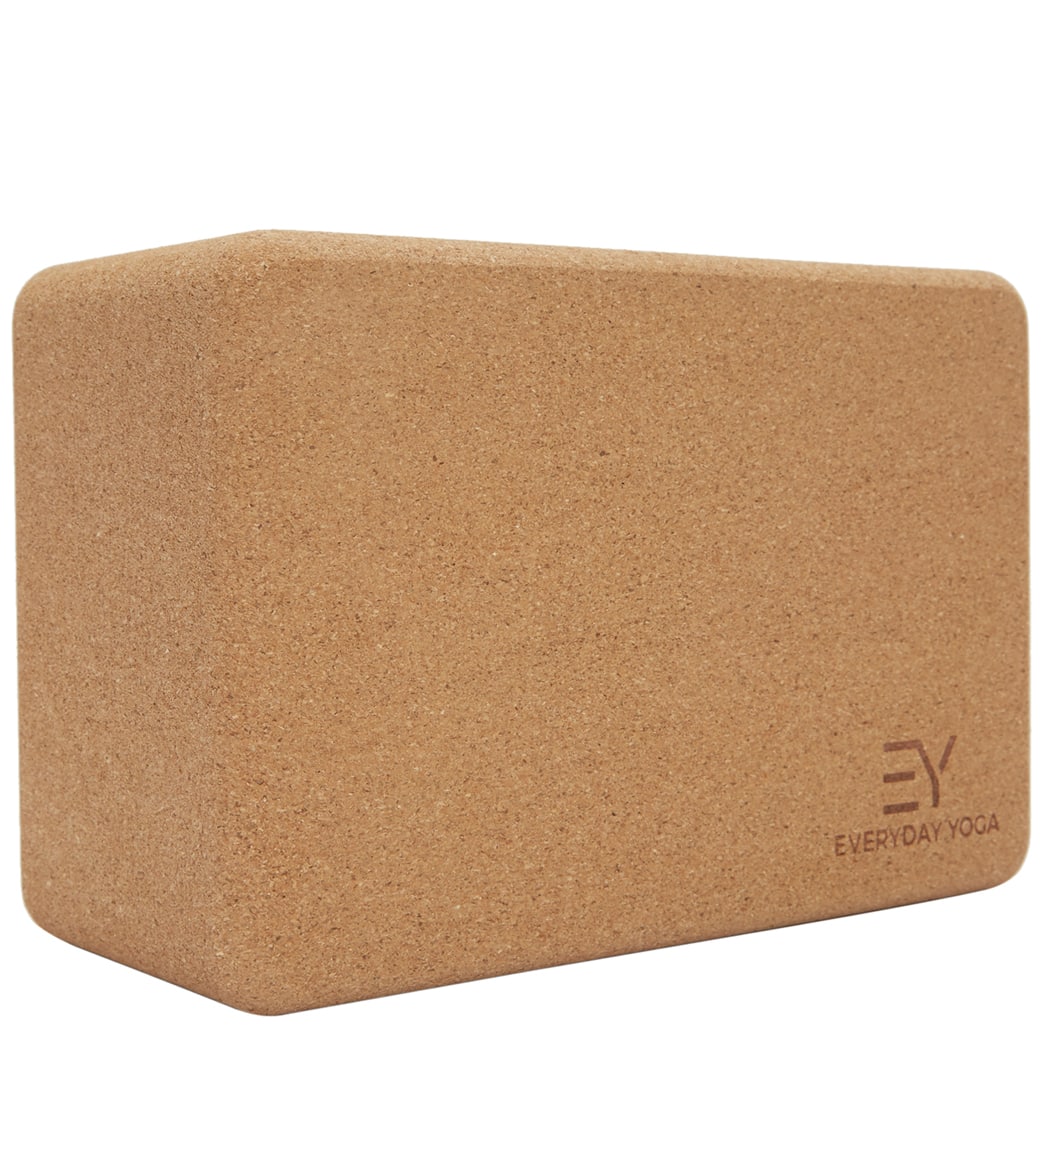 Everyday Yoga Cork Yoga Block Standard 4 inch at YogaOutlet.com –